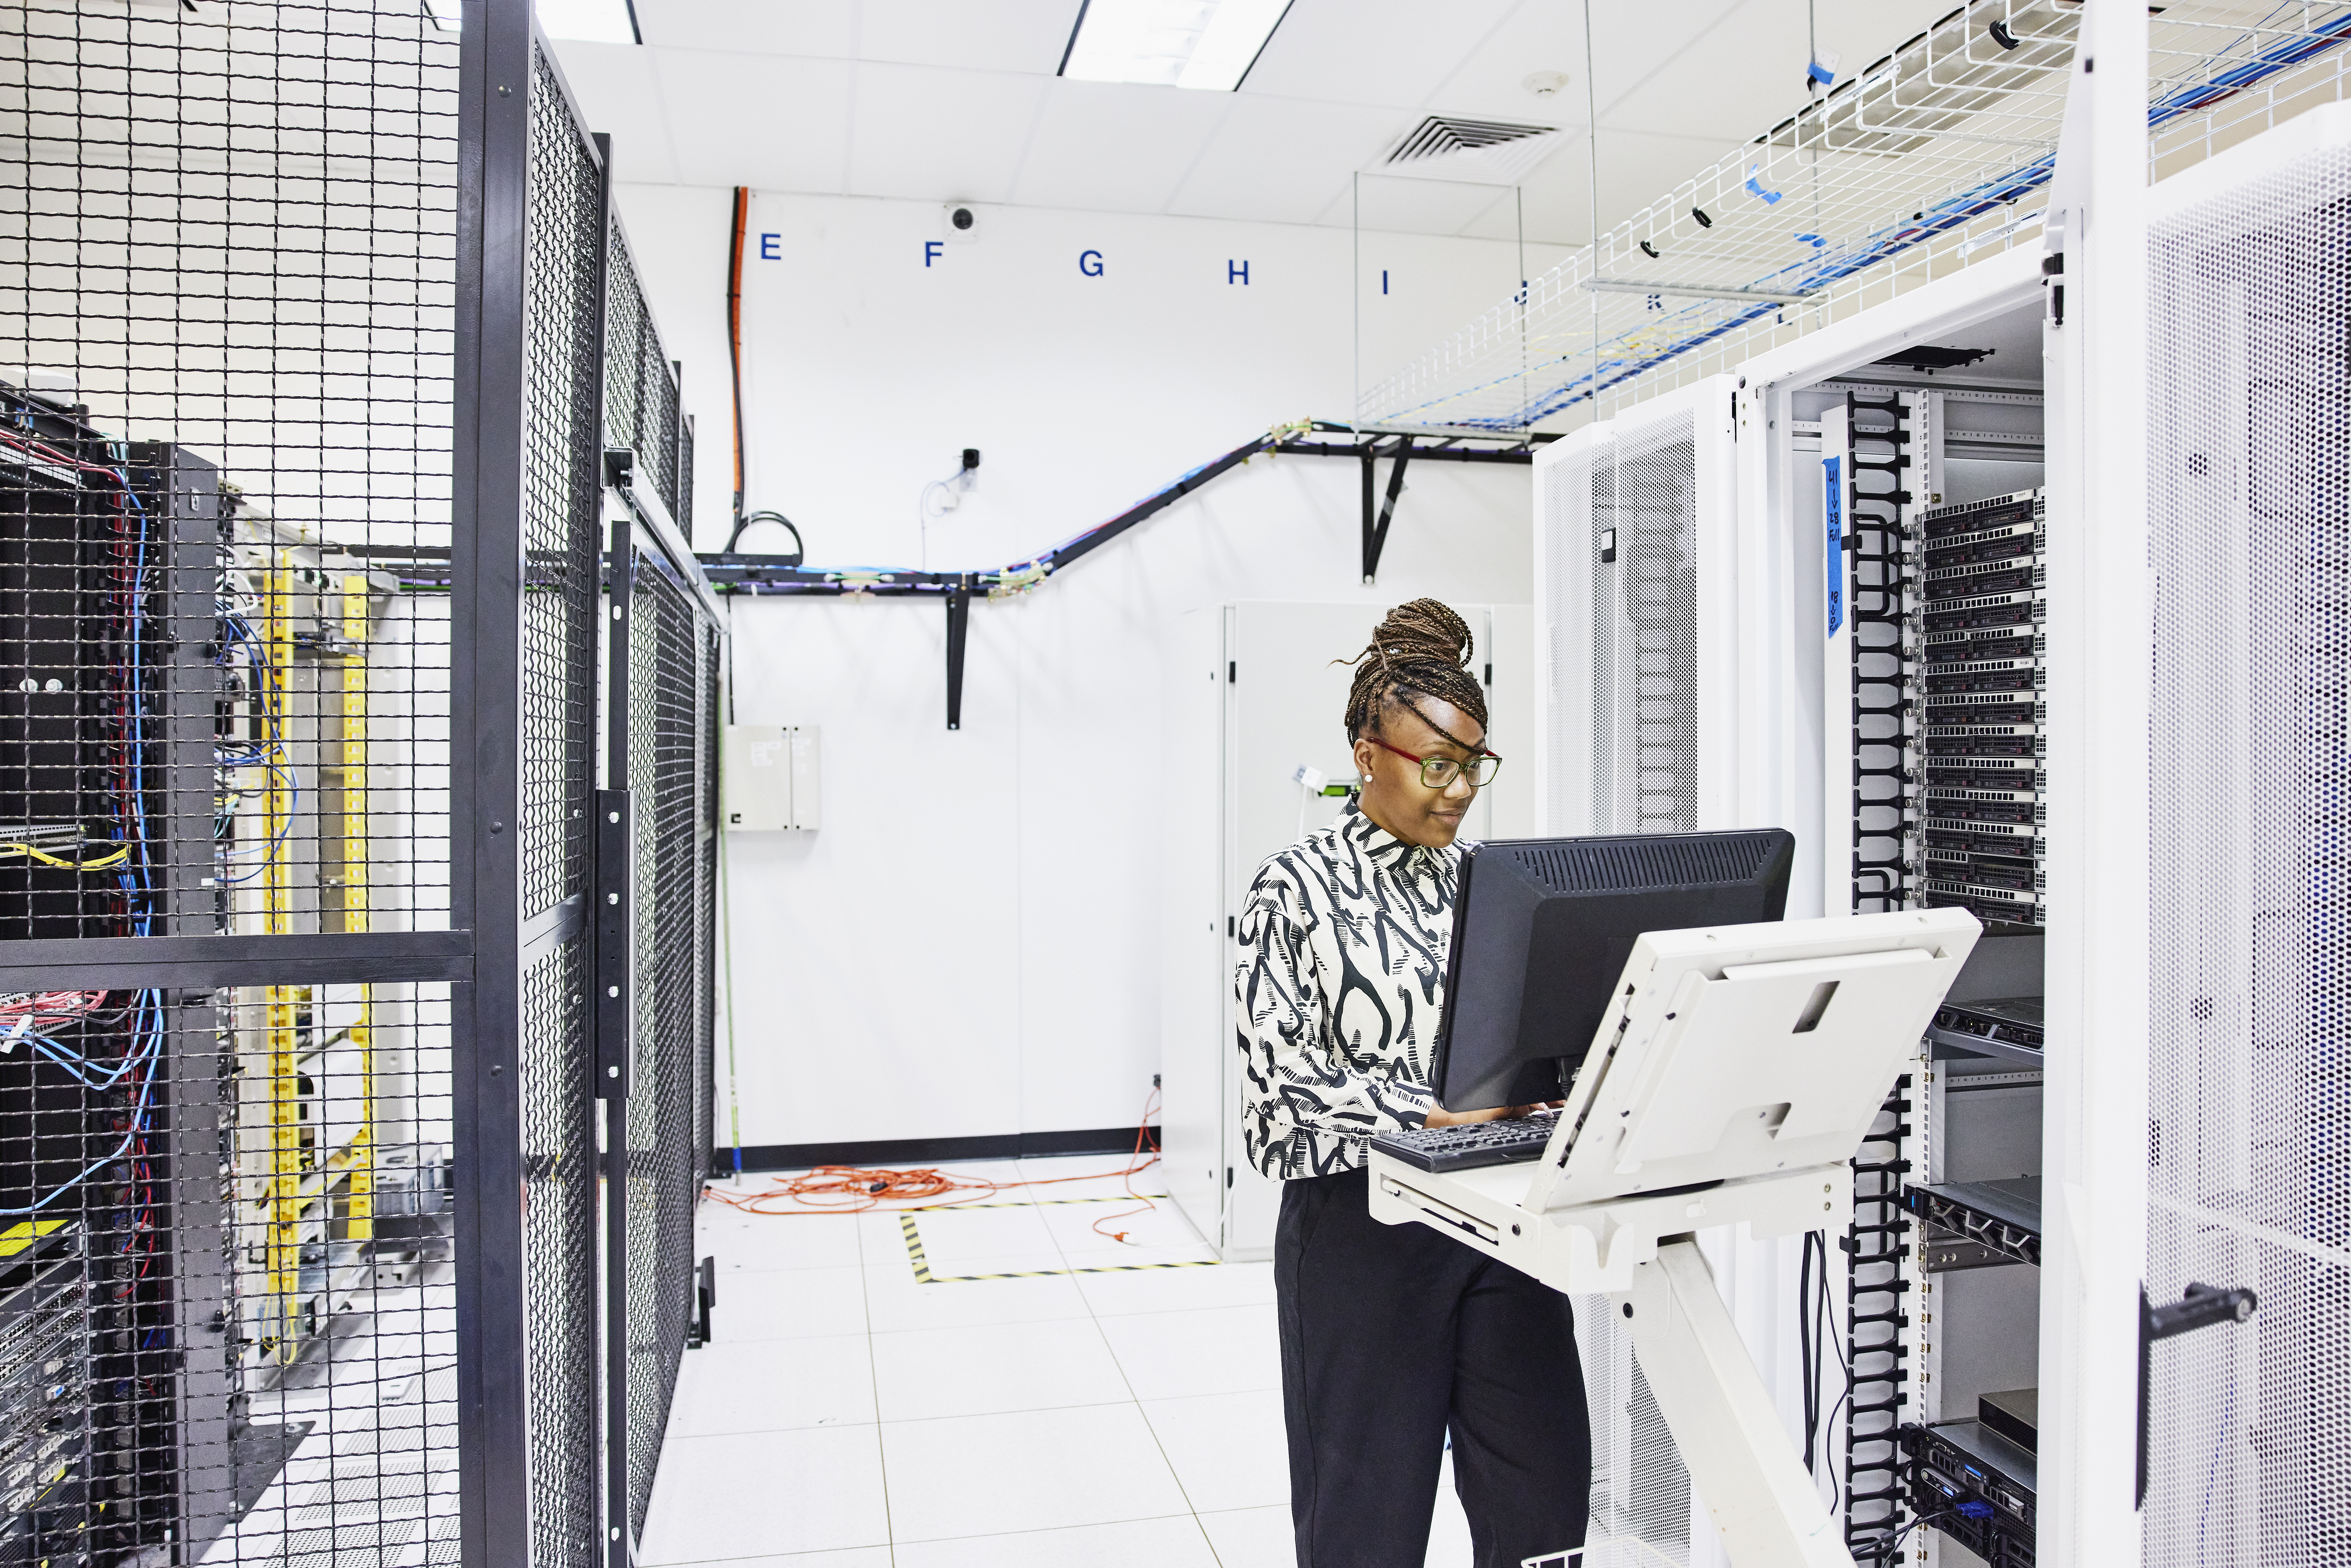  IT professional configuring server in data center